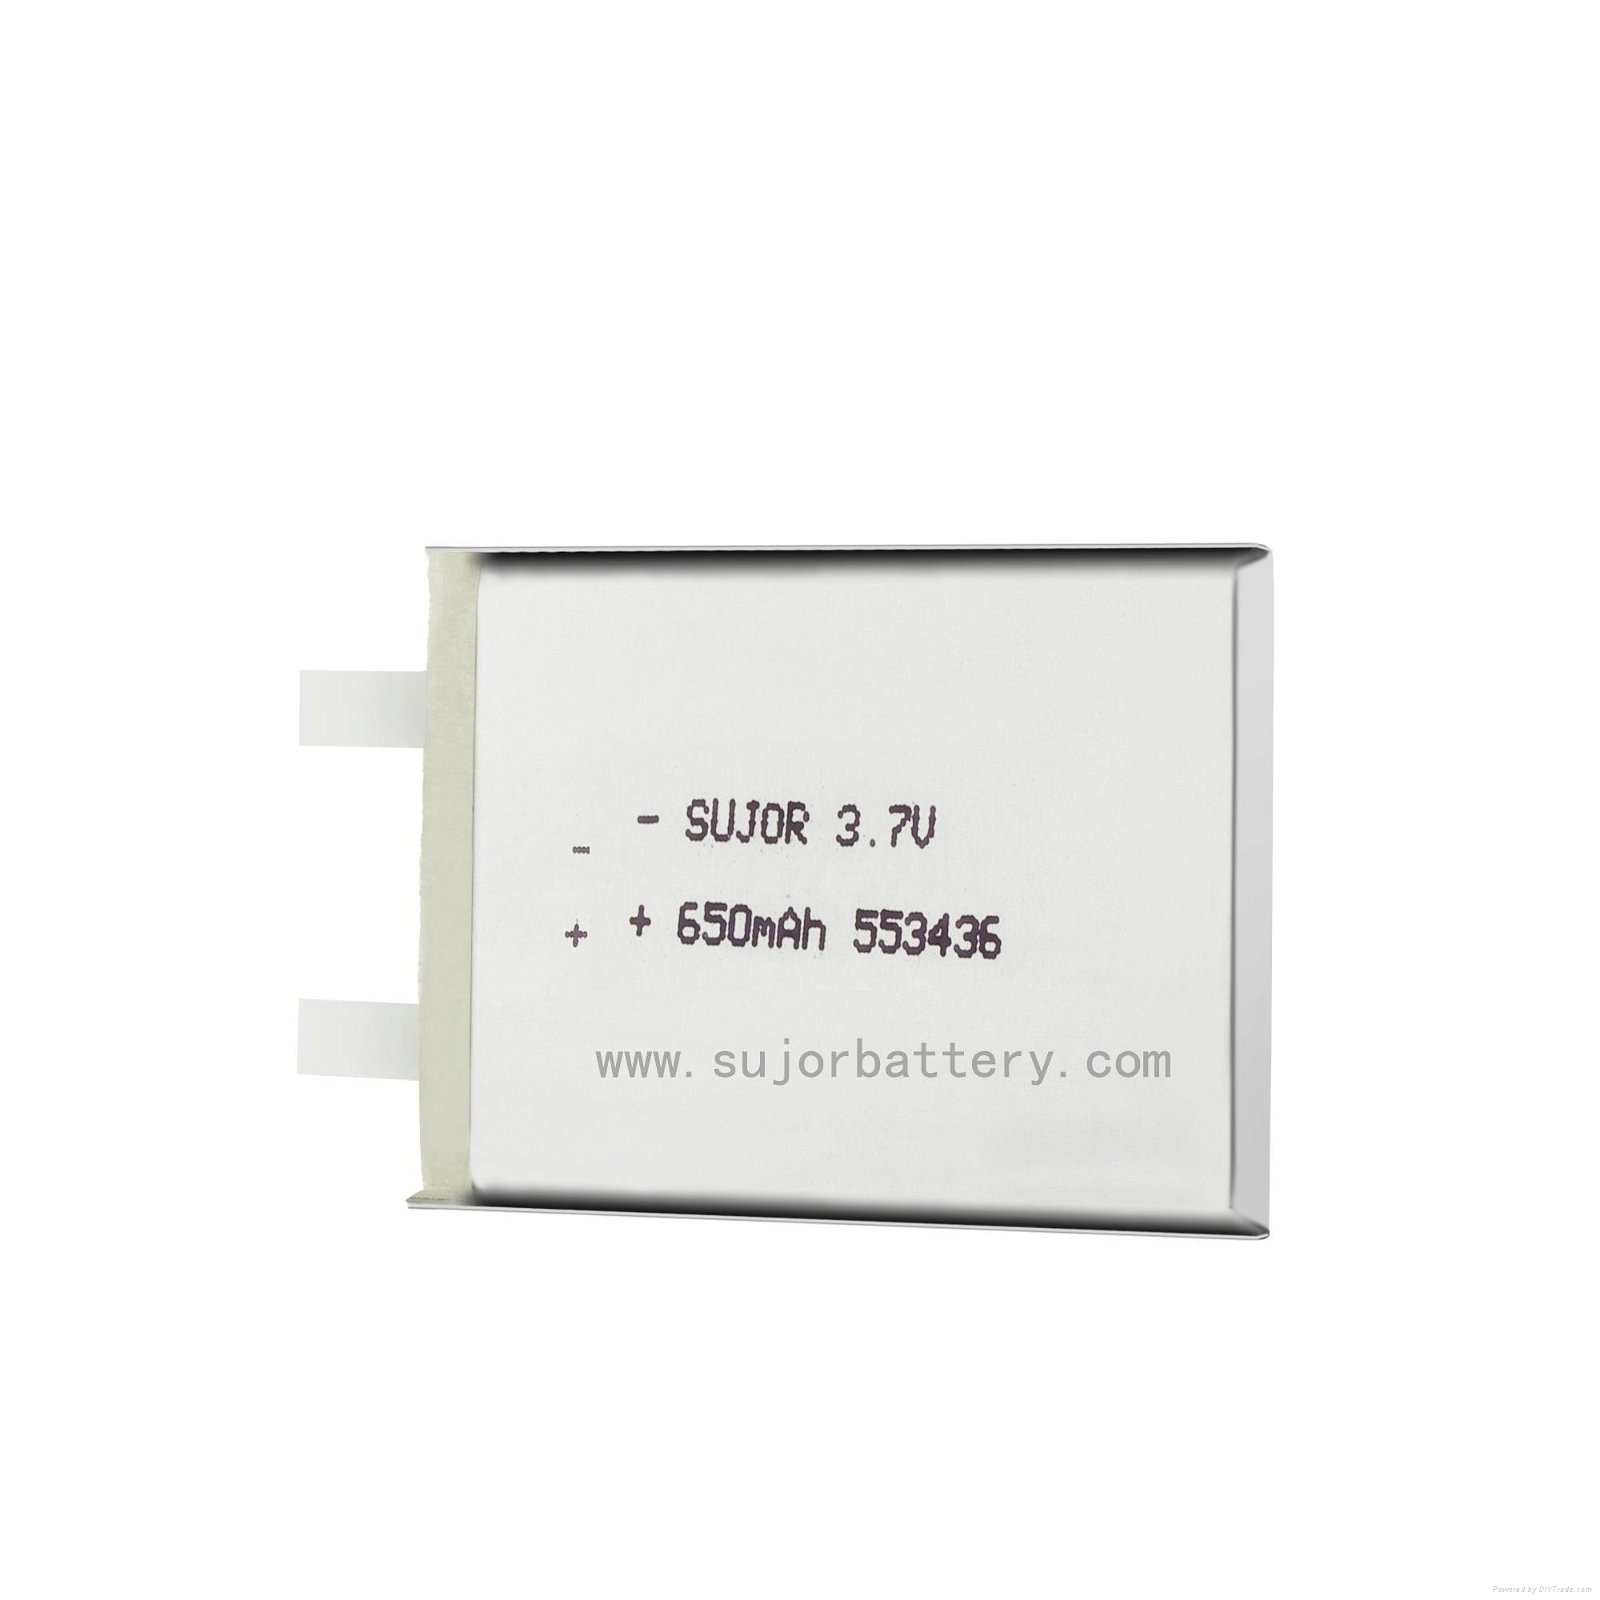 Lithium polymer battery for GPS 3.7V LP553436 650mAh